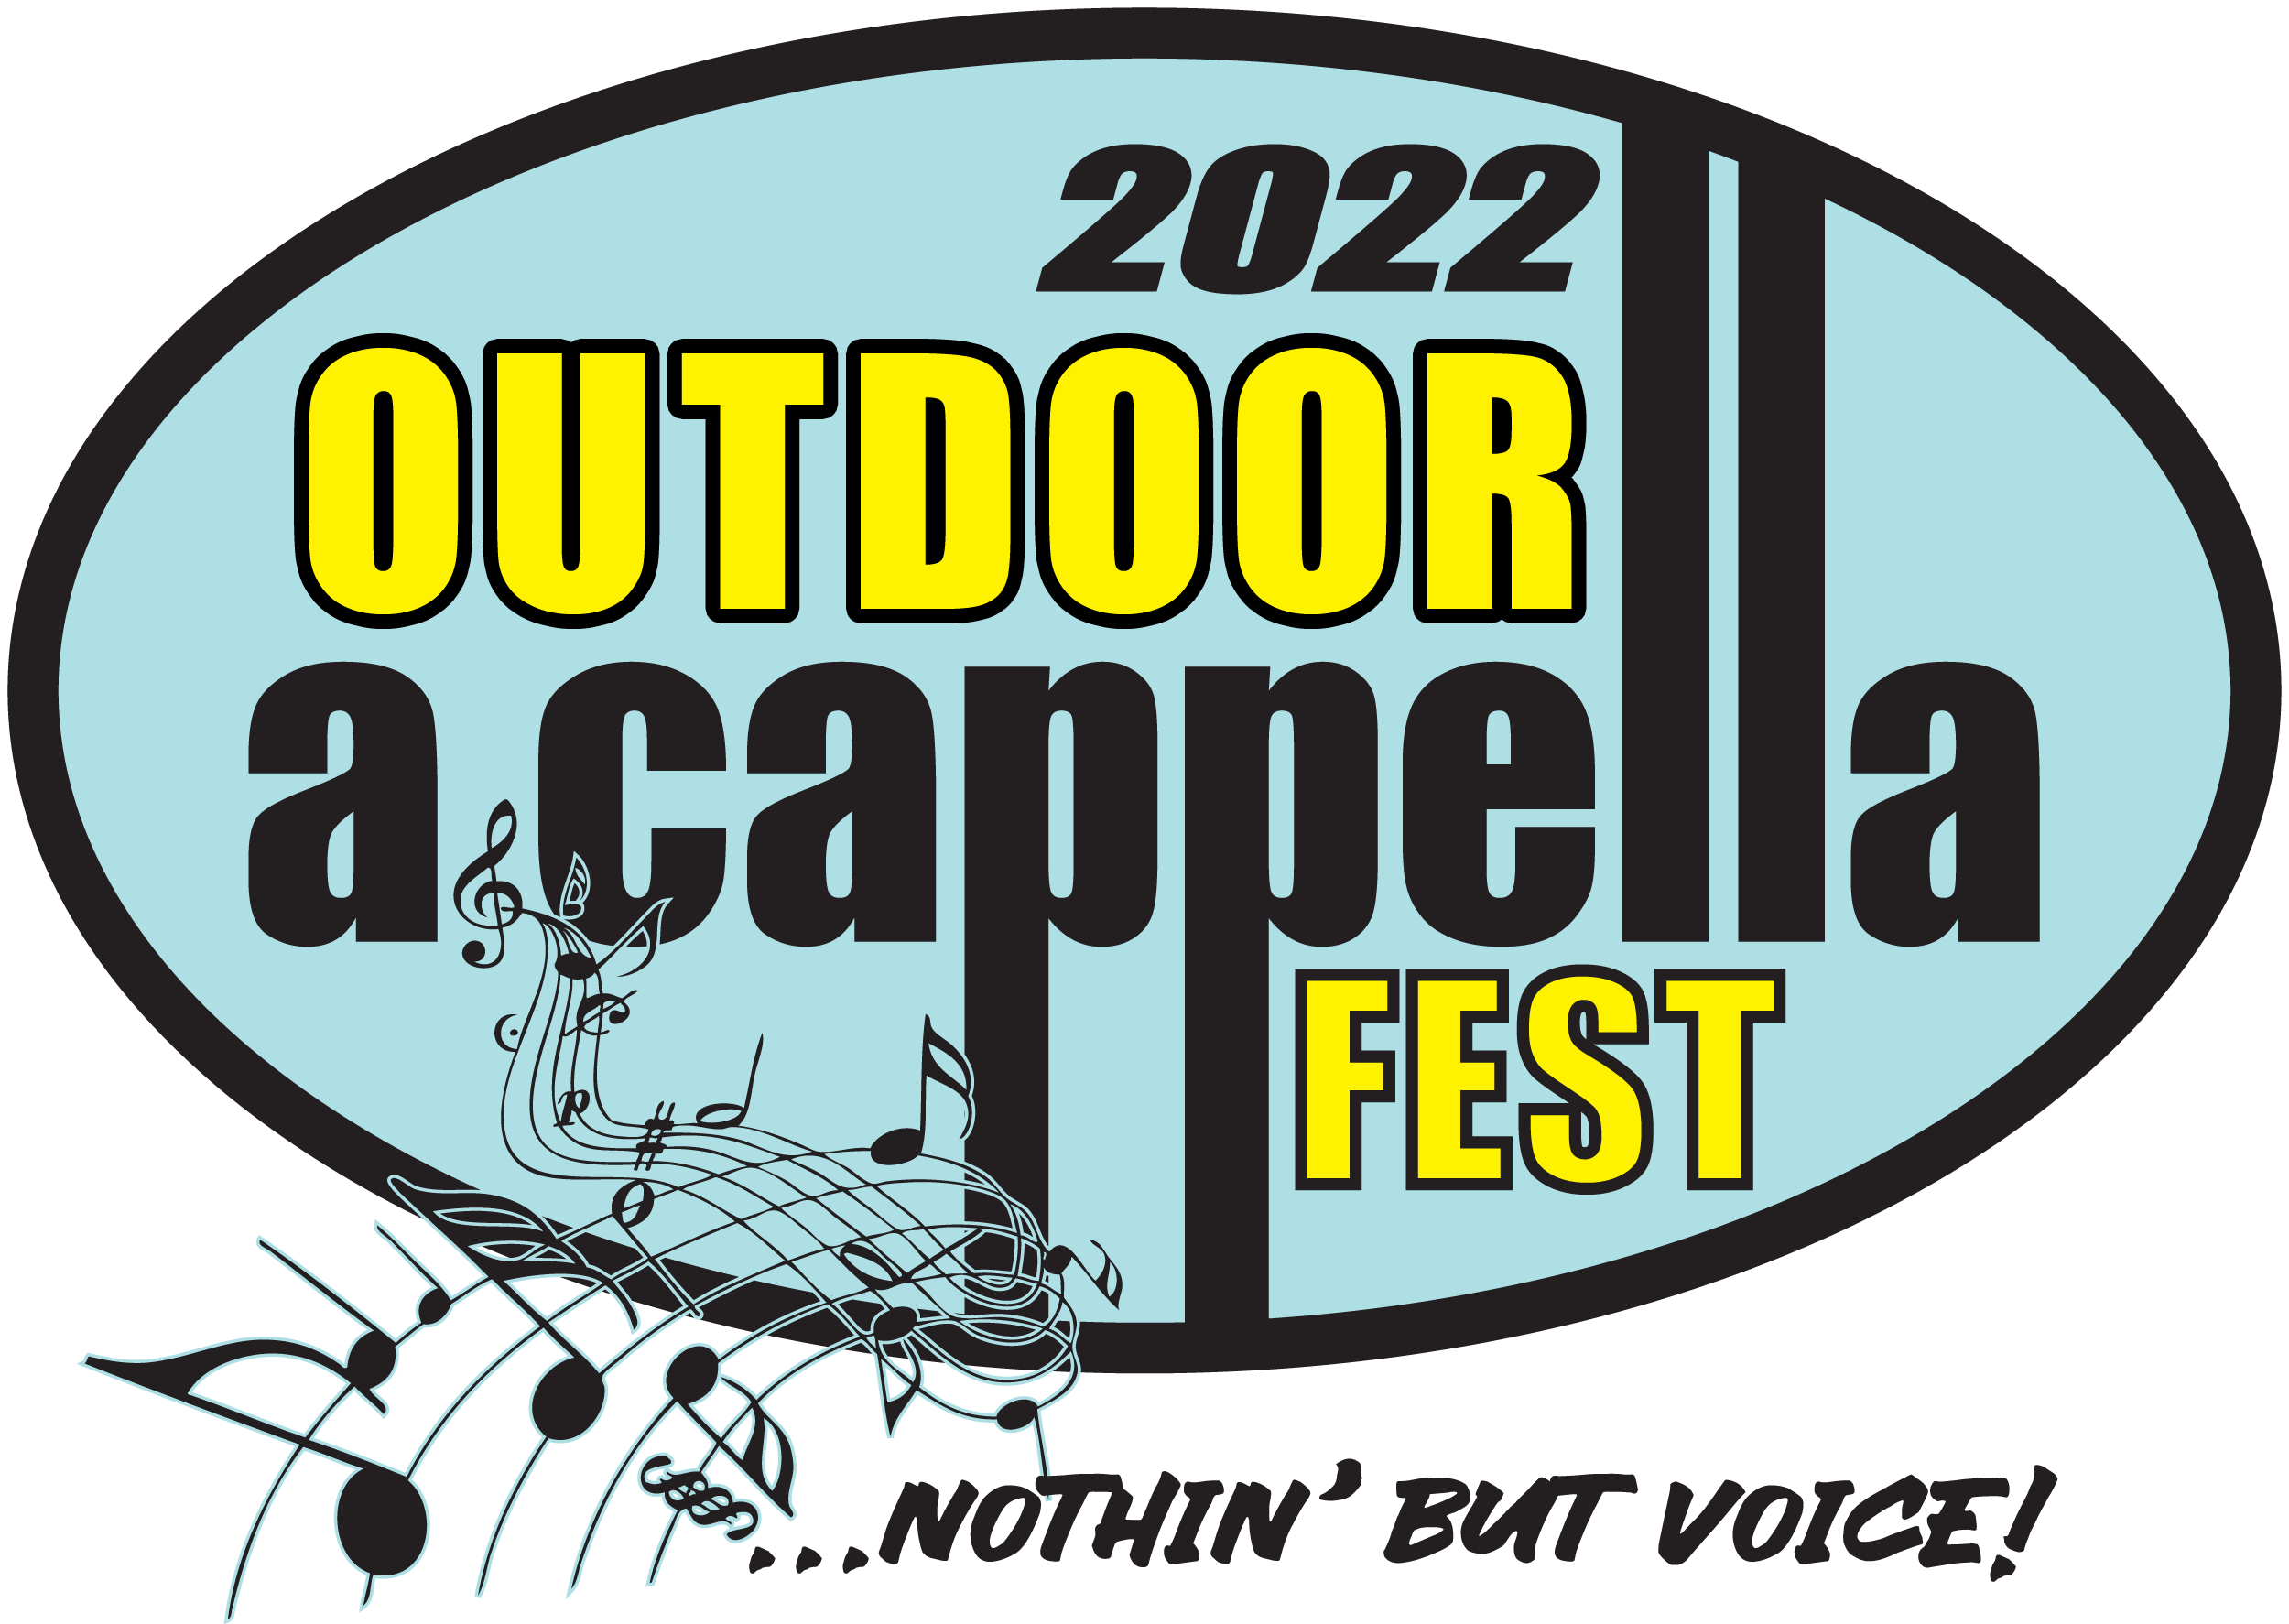 Outdoor Acappella Fest 2022